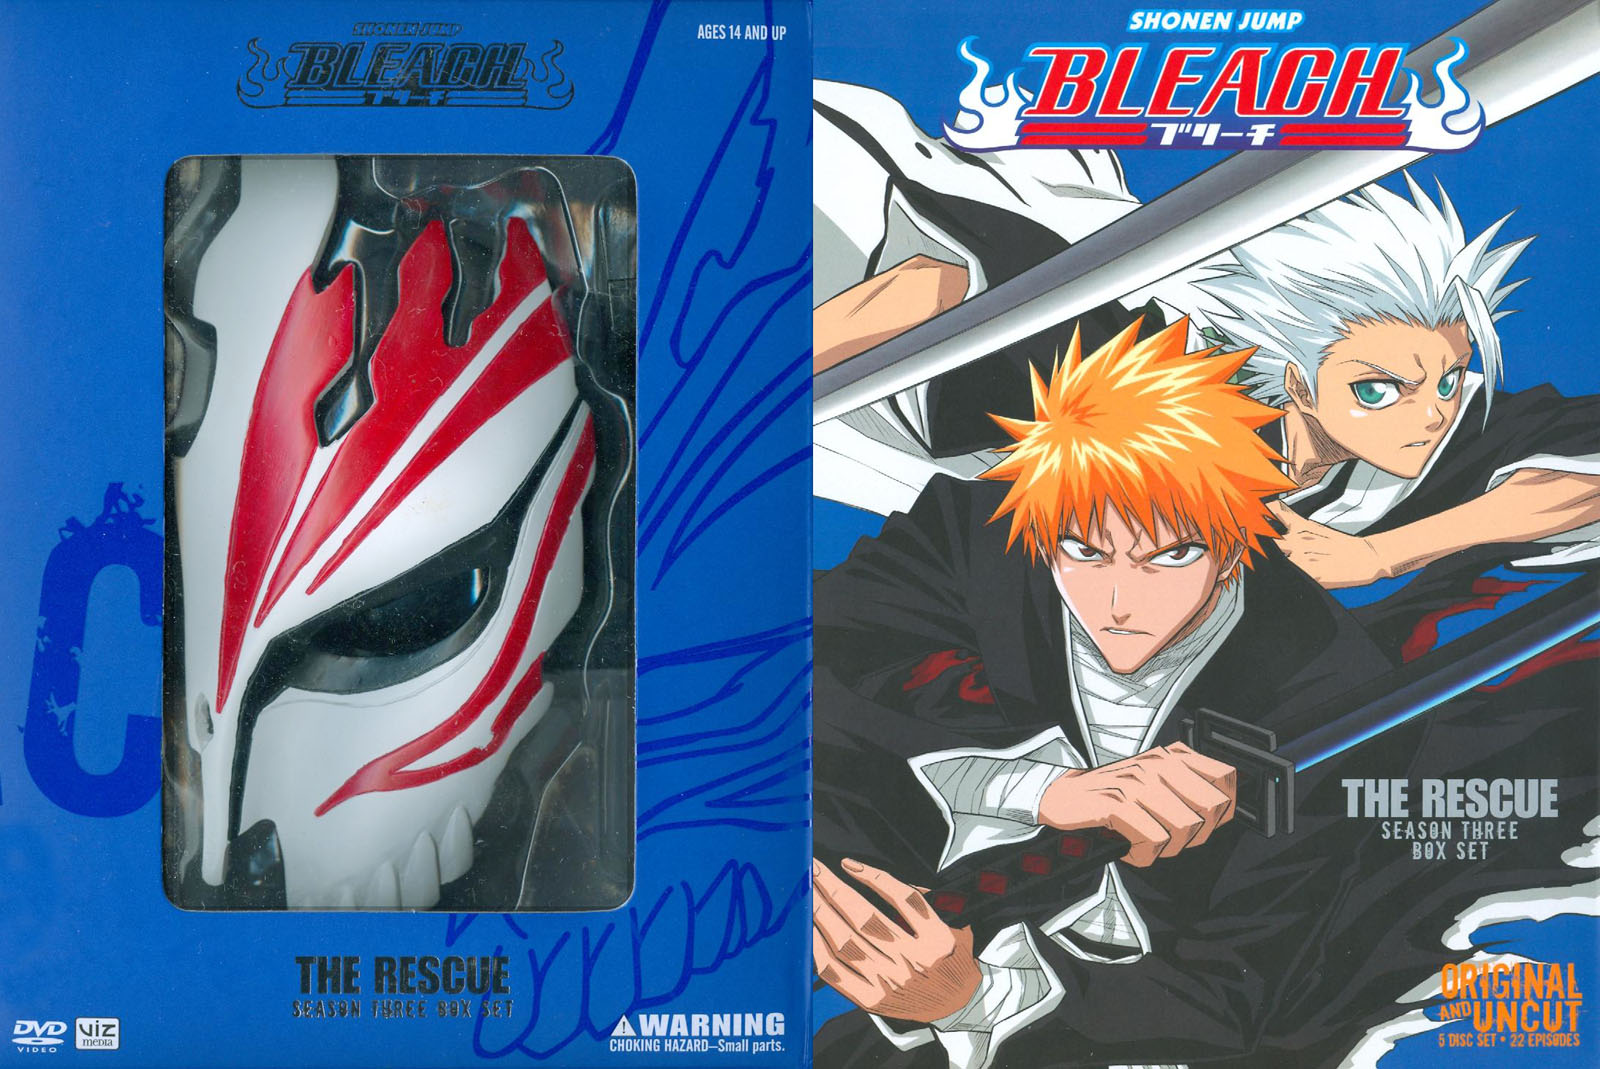 Bleach: The Rescue Season 3 (5 DVD Box Set) 22 Episodes Uncut Brand New  Region 1 782009239260